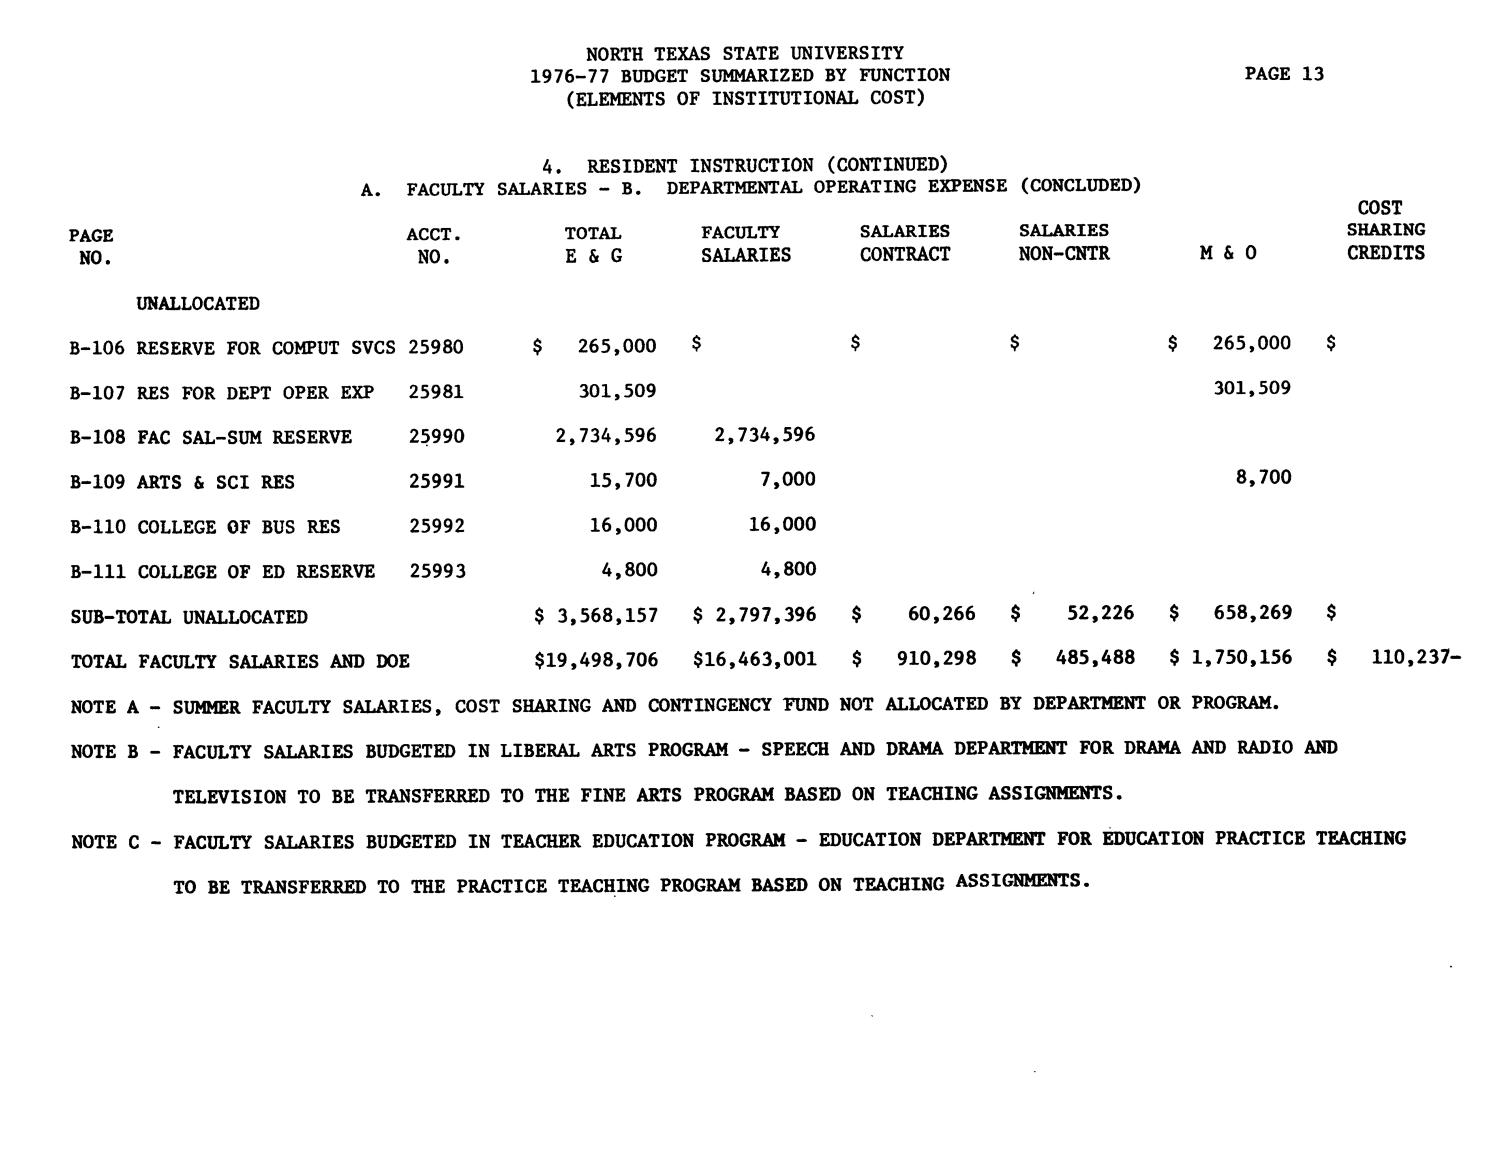 North Texas State University Budget: 1976-1977
                                                
                                                    13
                                                